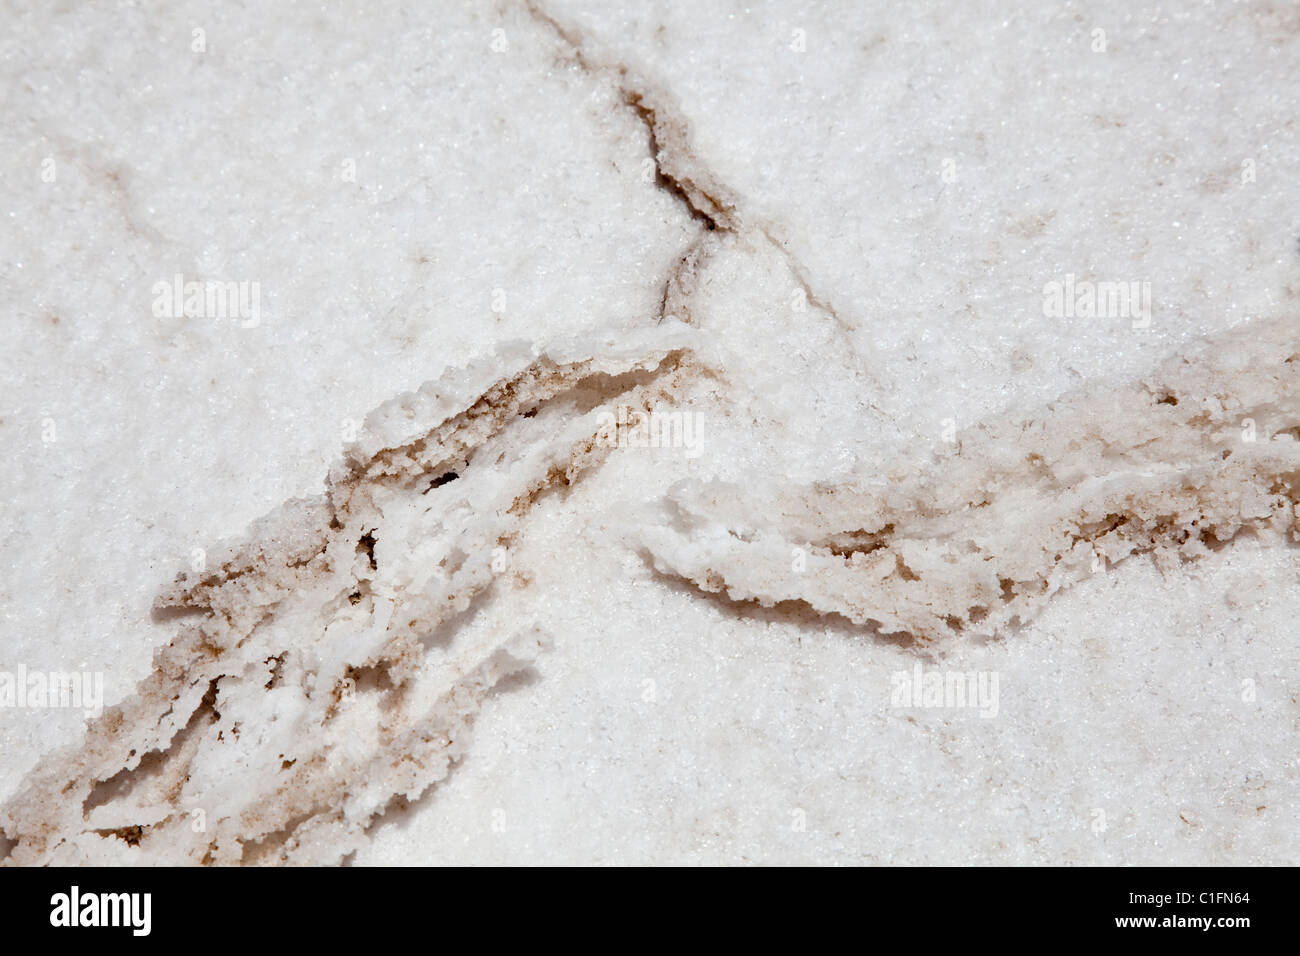 Shapes in the Salt, “Salar de Uyuni” Bolivian salt flats, Bolivia “South America” Stock Photo